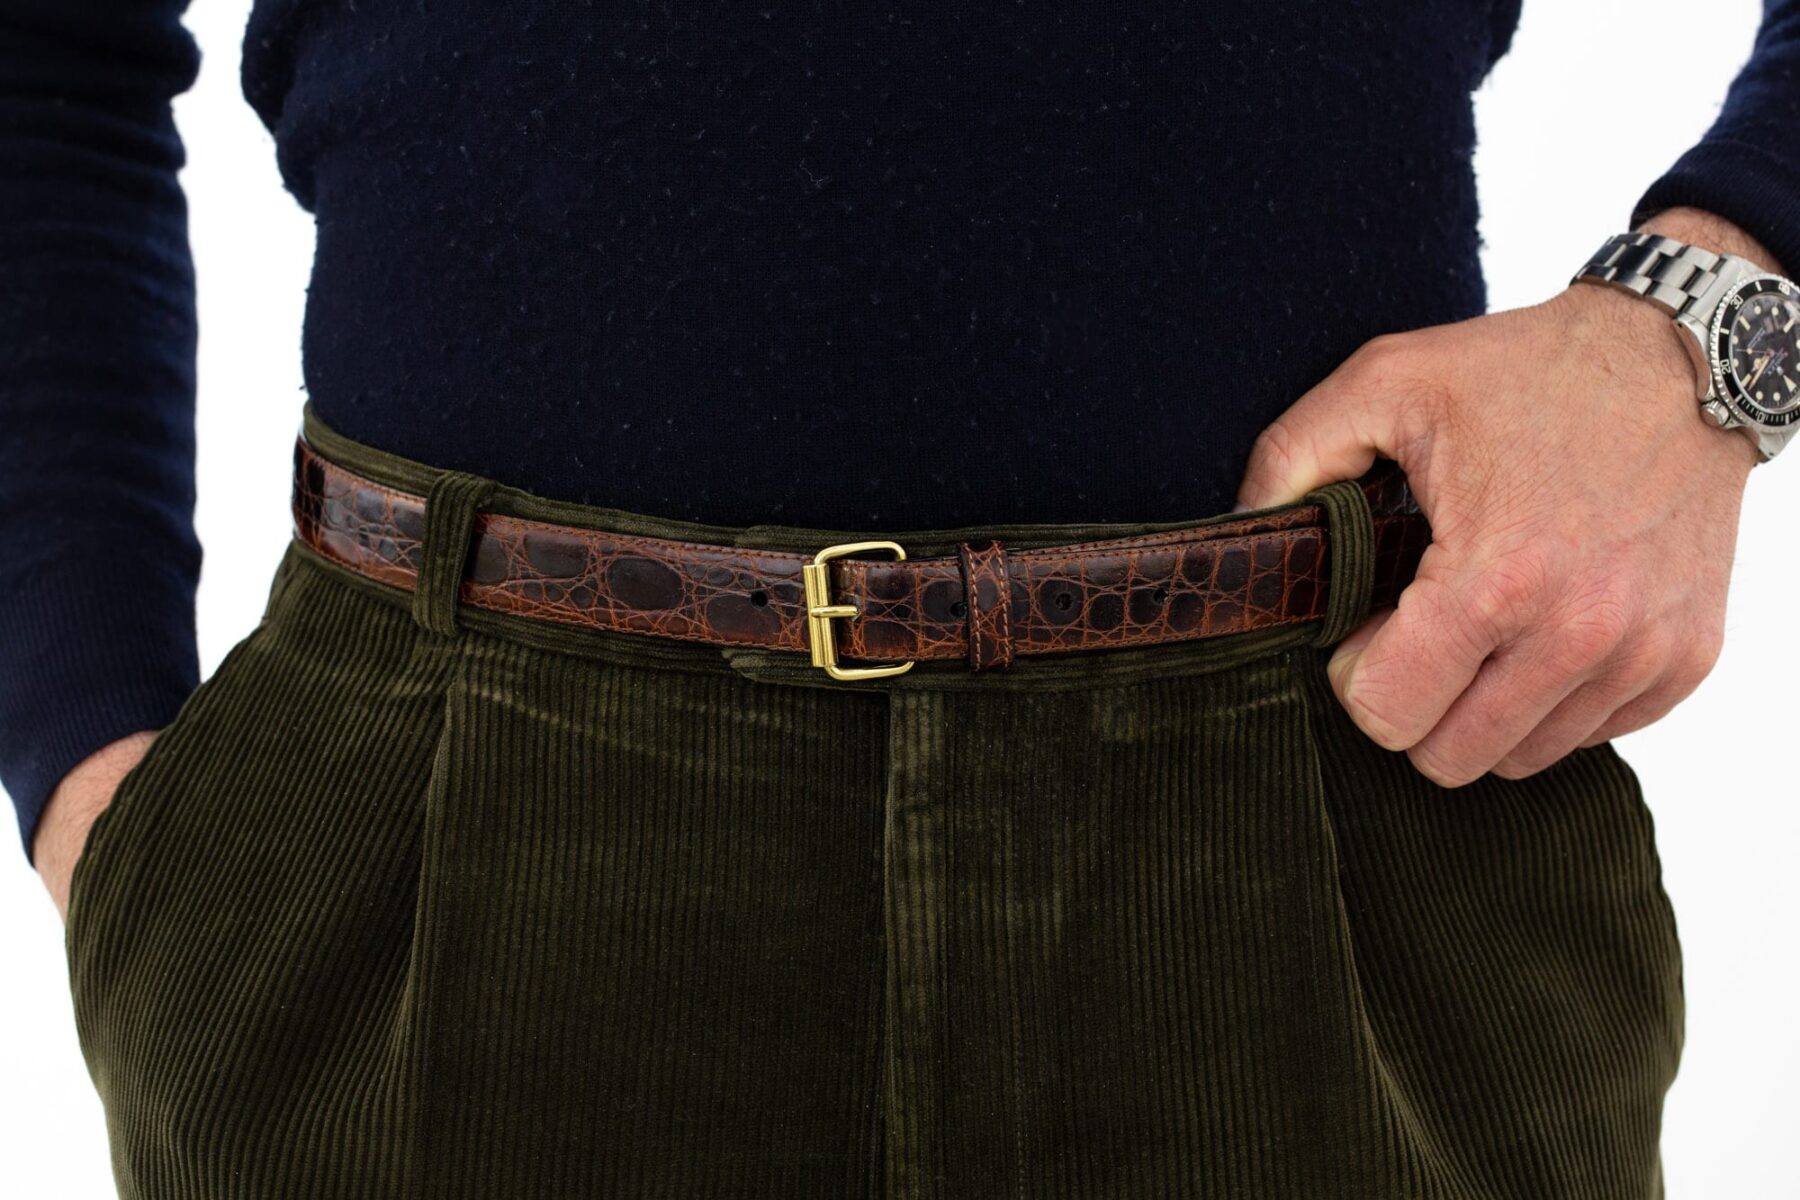 Hazelnut Brown Crocodile Leather Belt With Brass Buckle